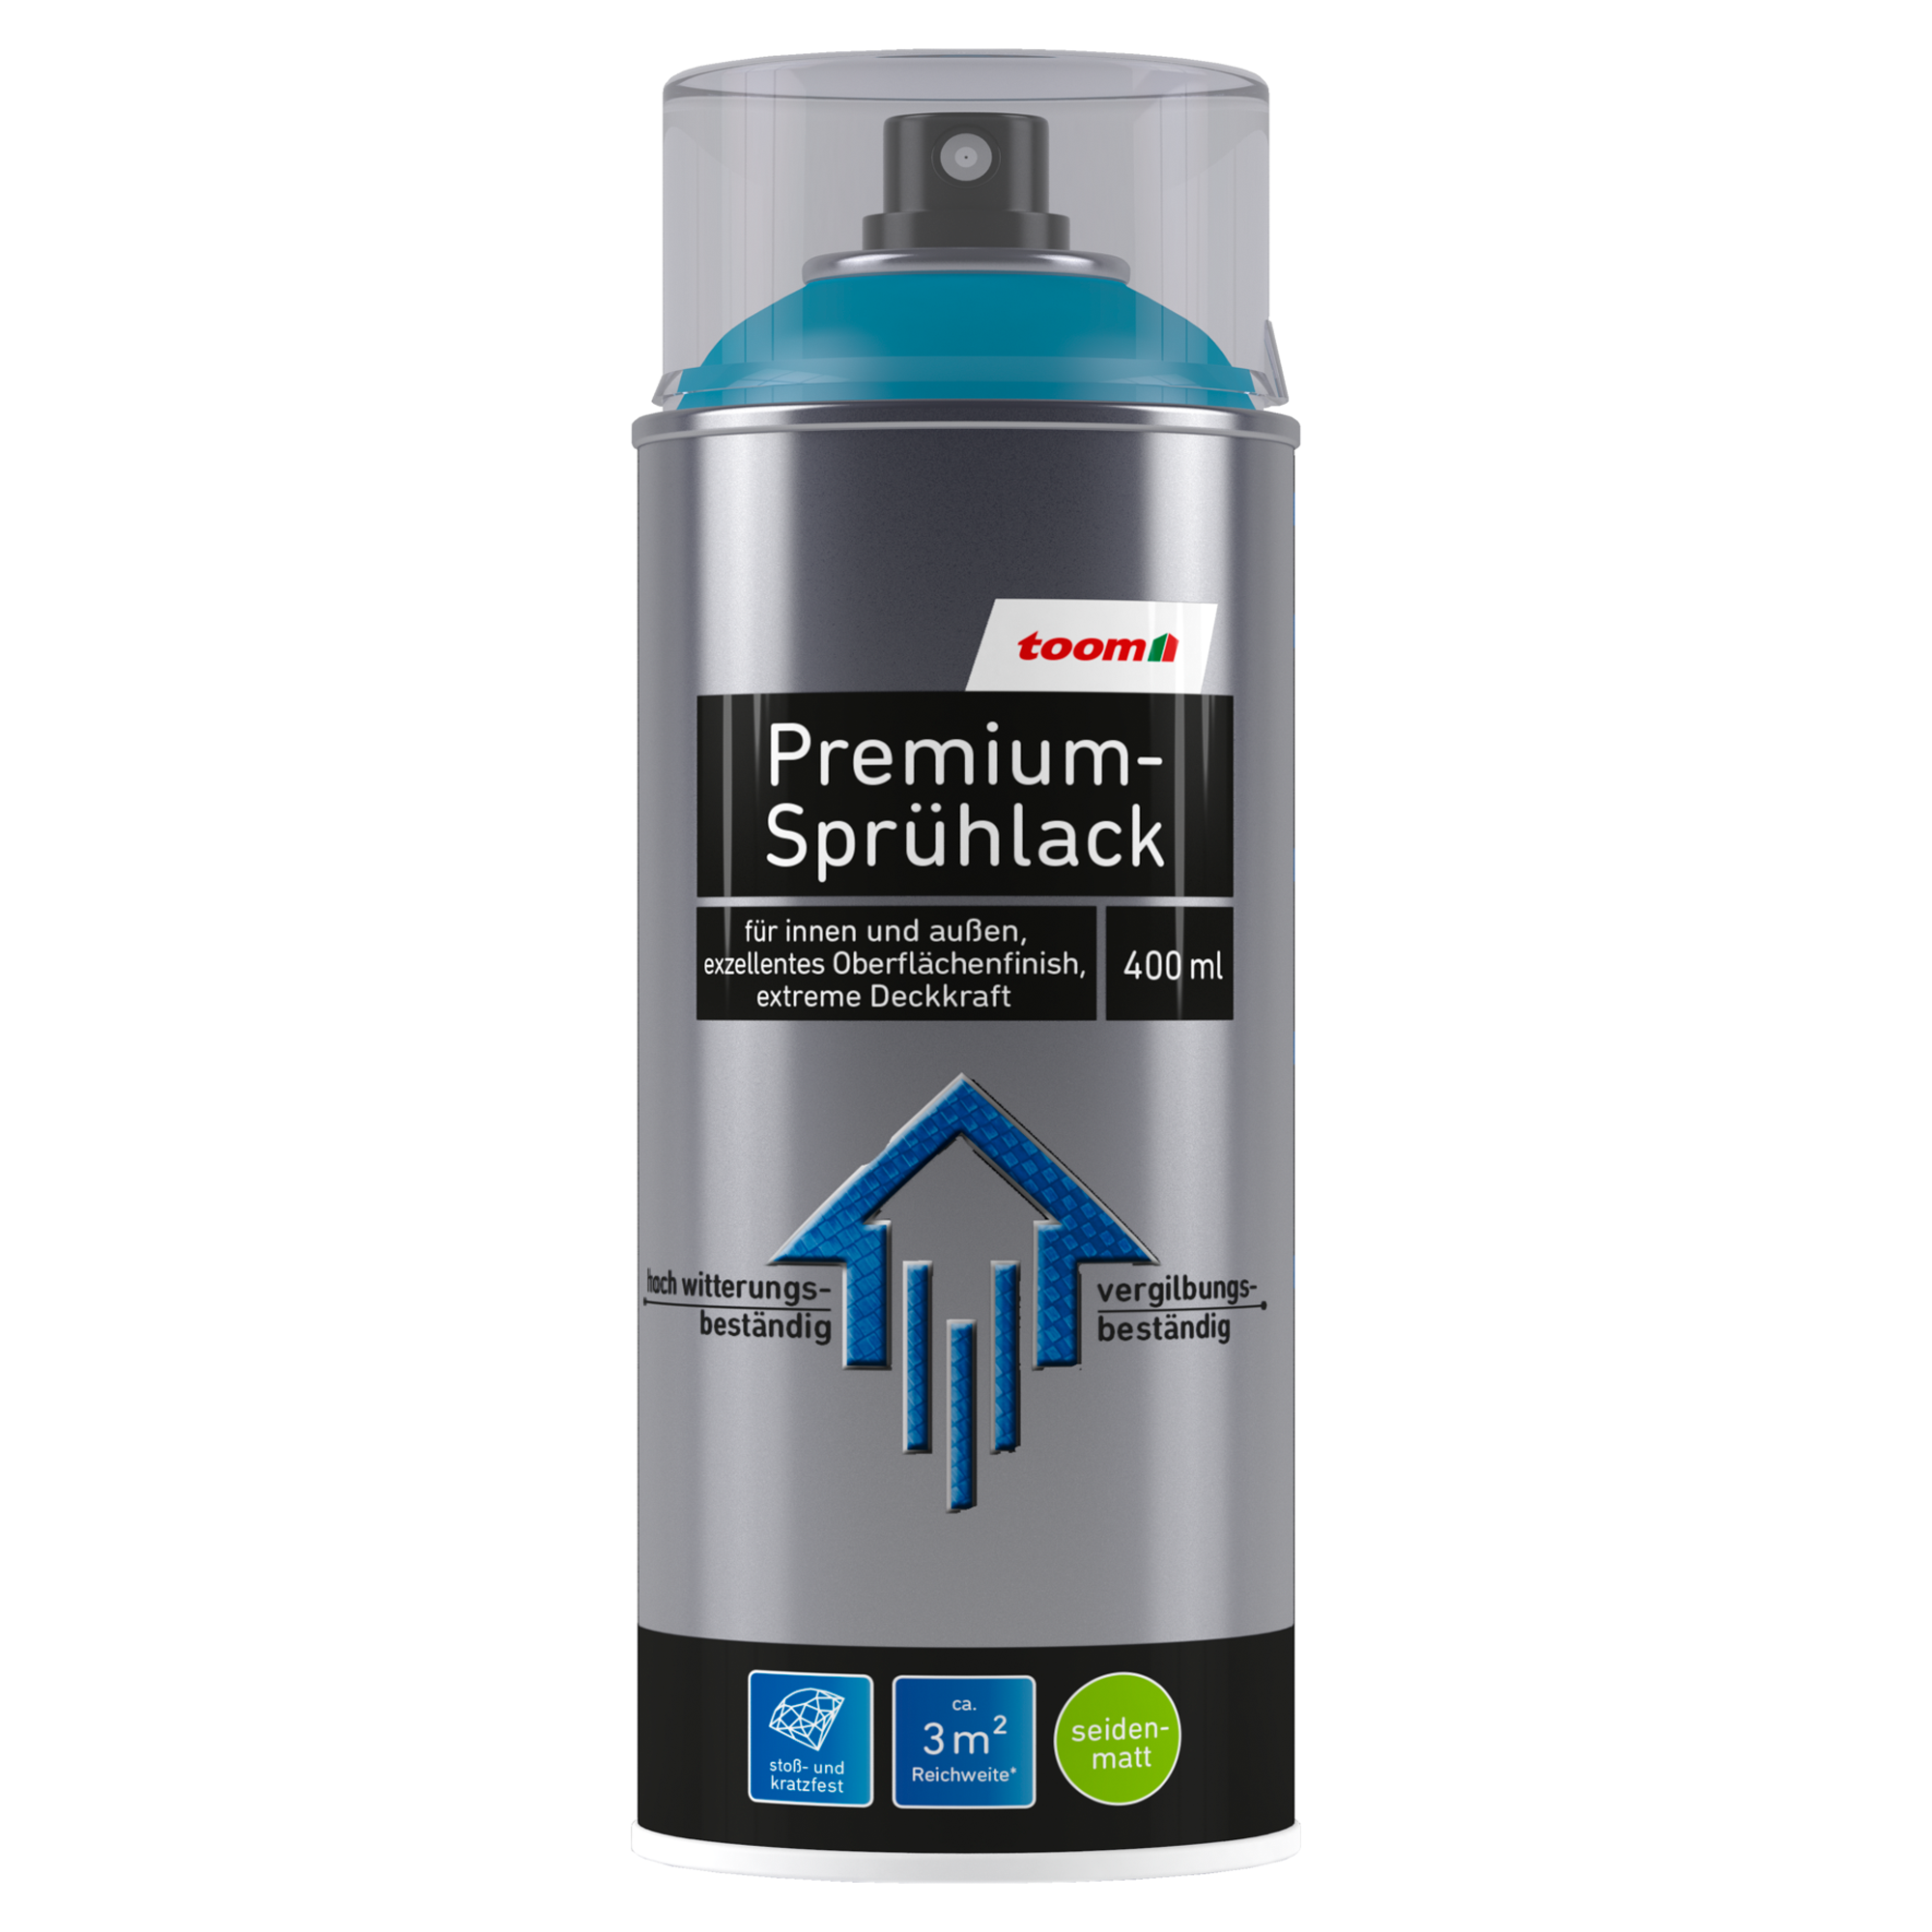 Premium-Sprühlack petrolfarben seidenmatt 400 ml + product picture